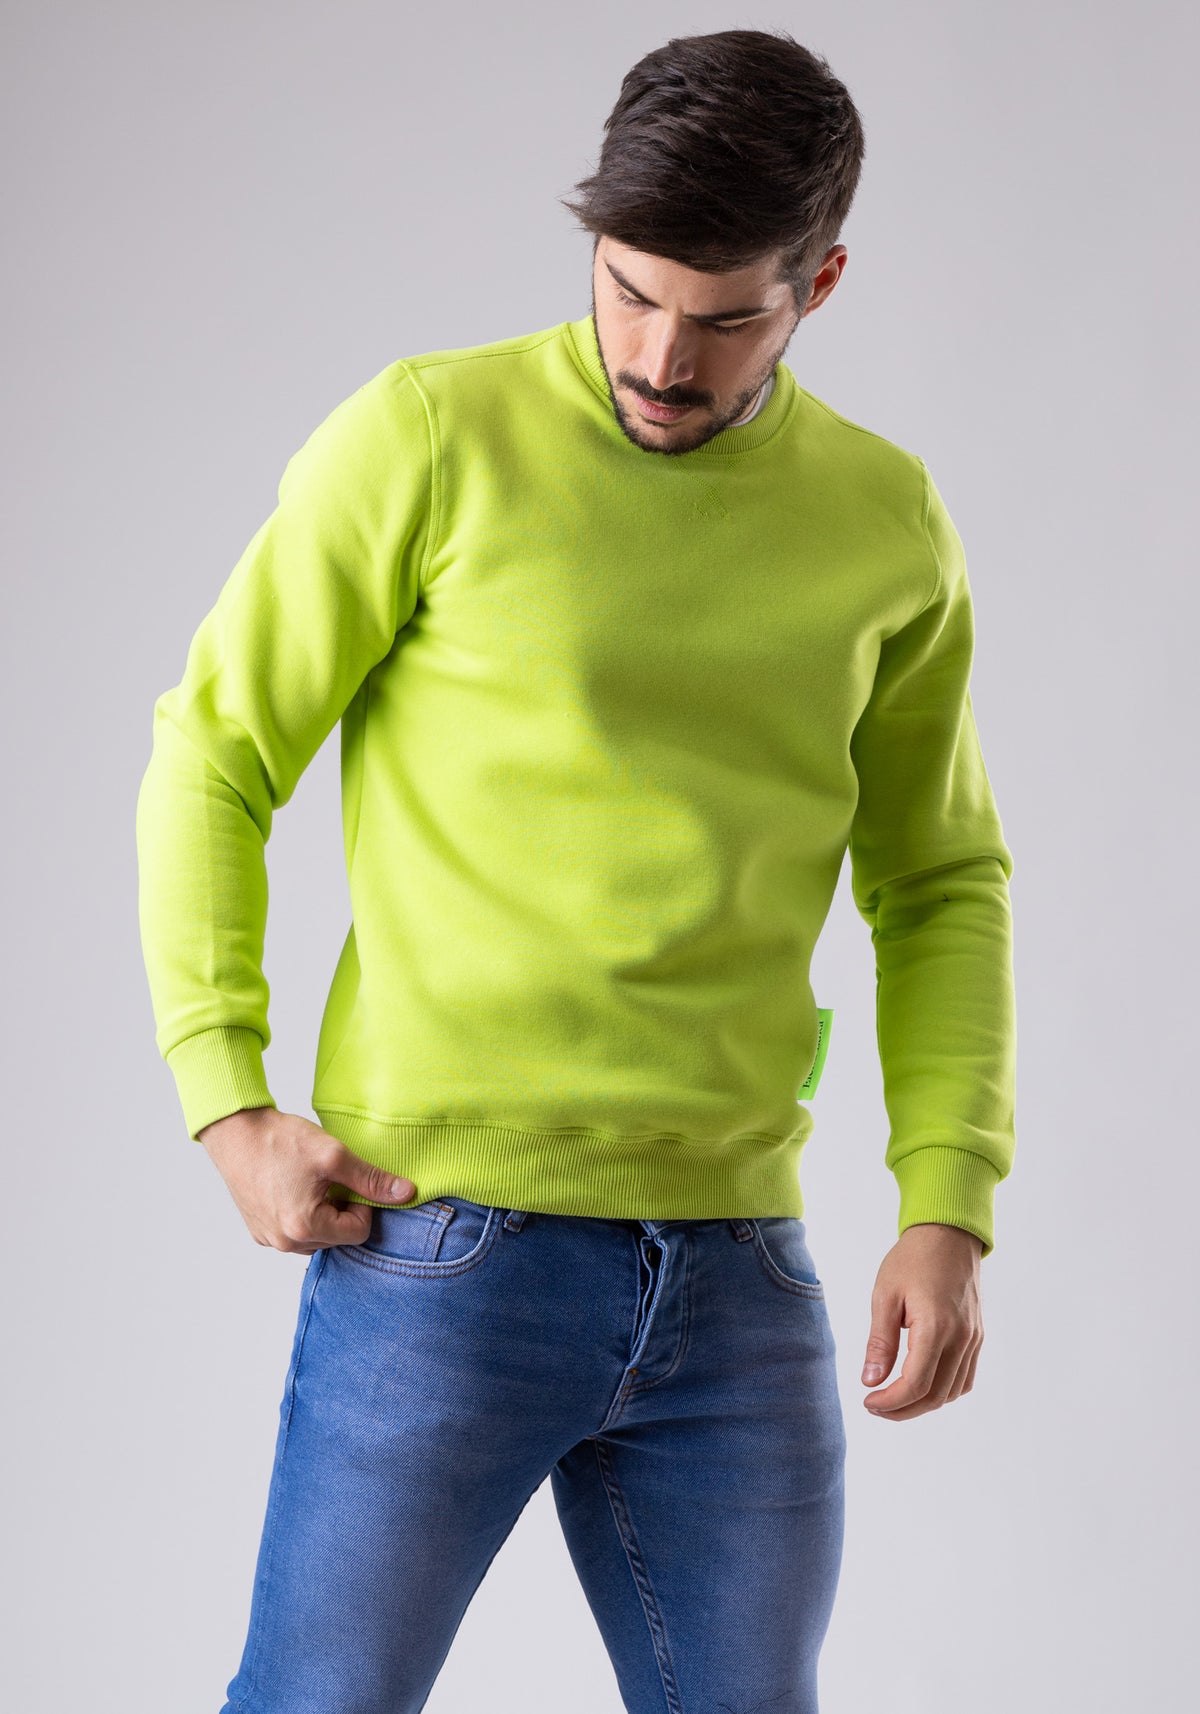 Sweatshirt green